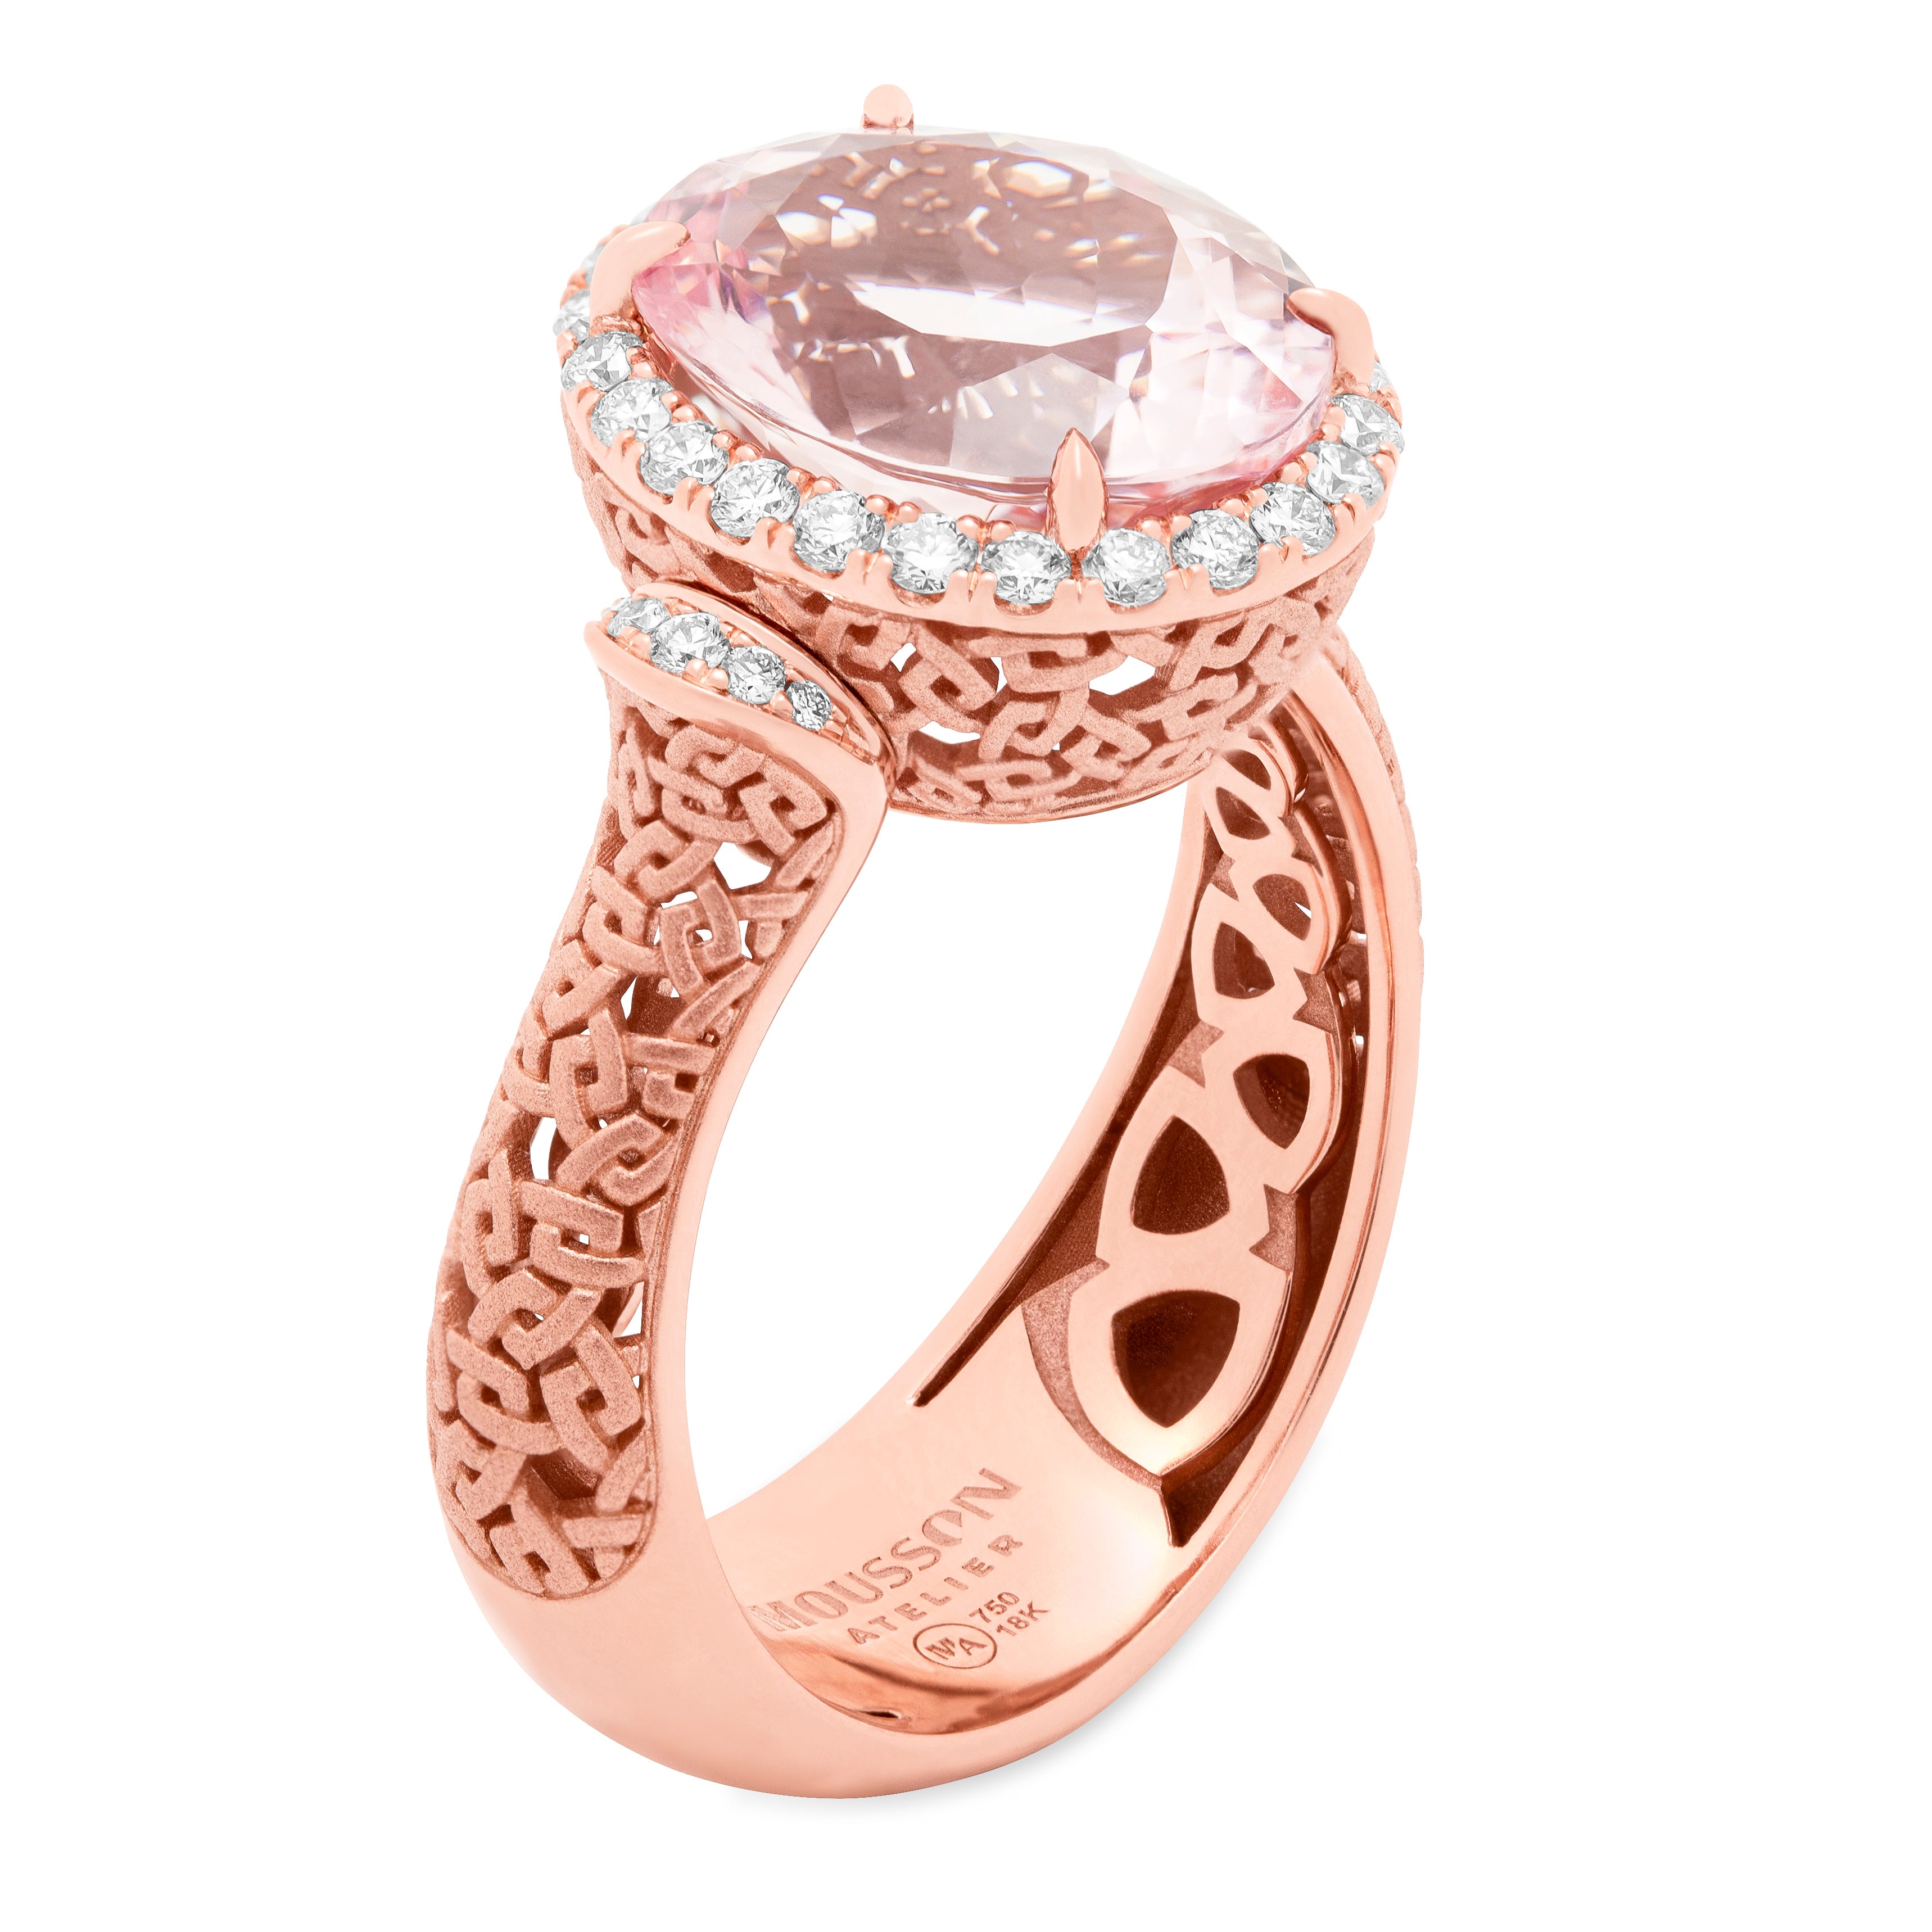 R 0144-11, 18K Rose Gold, Morganite, Diamonds Ring